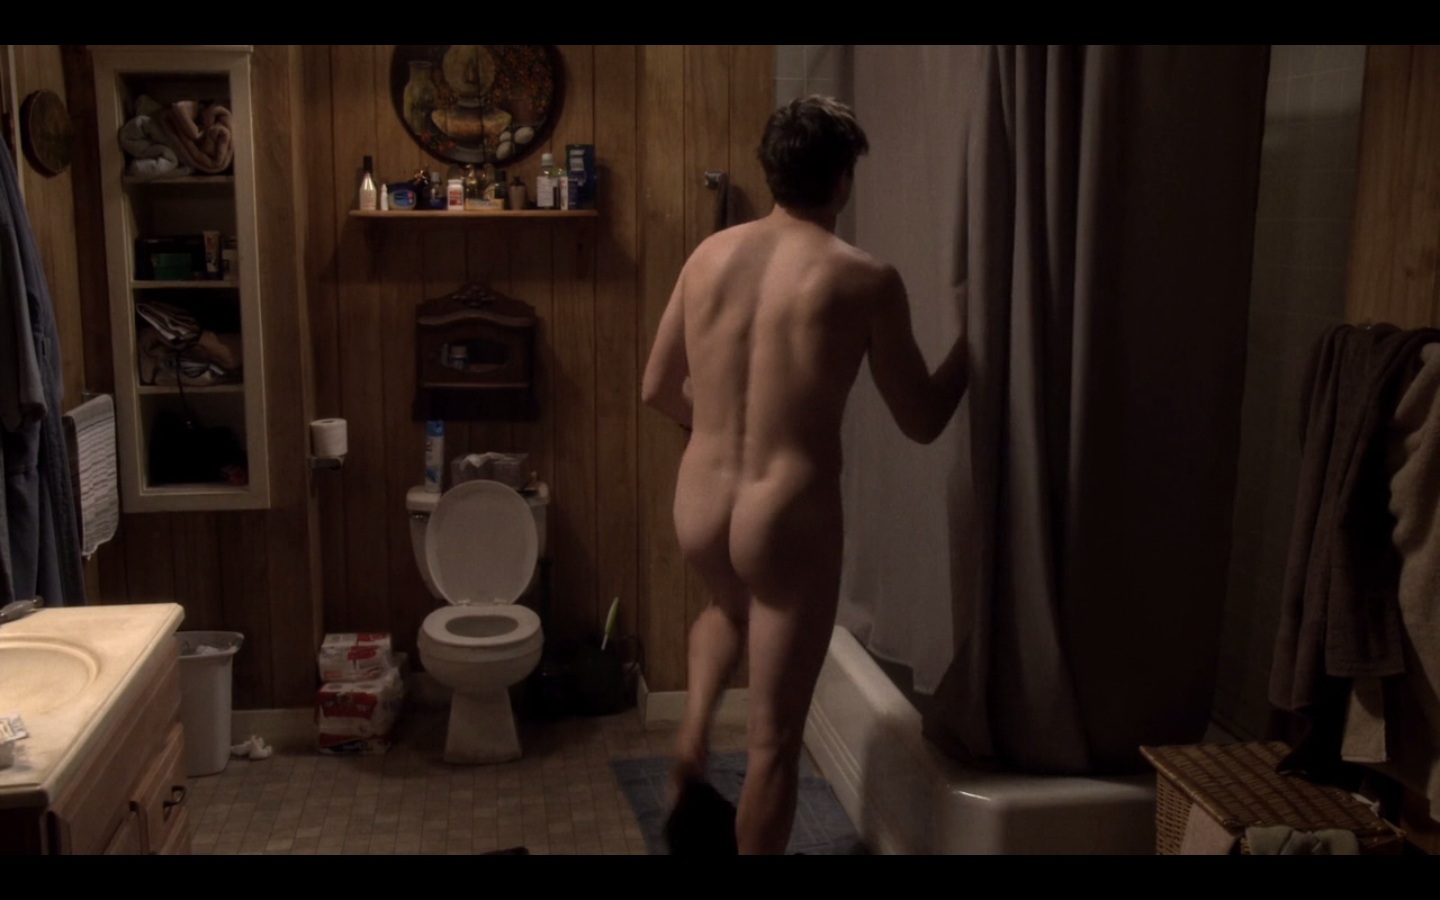 carly gunn reccomend ashton kutcher naked pic pic